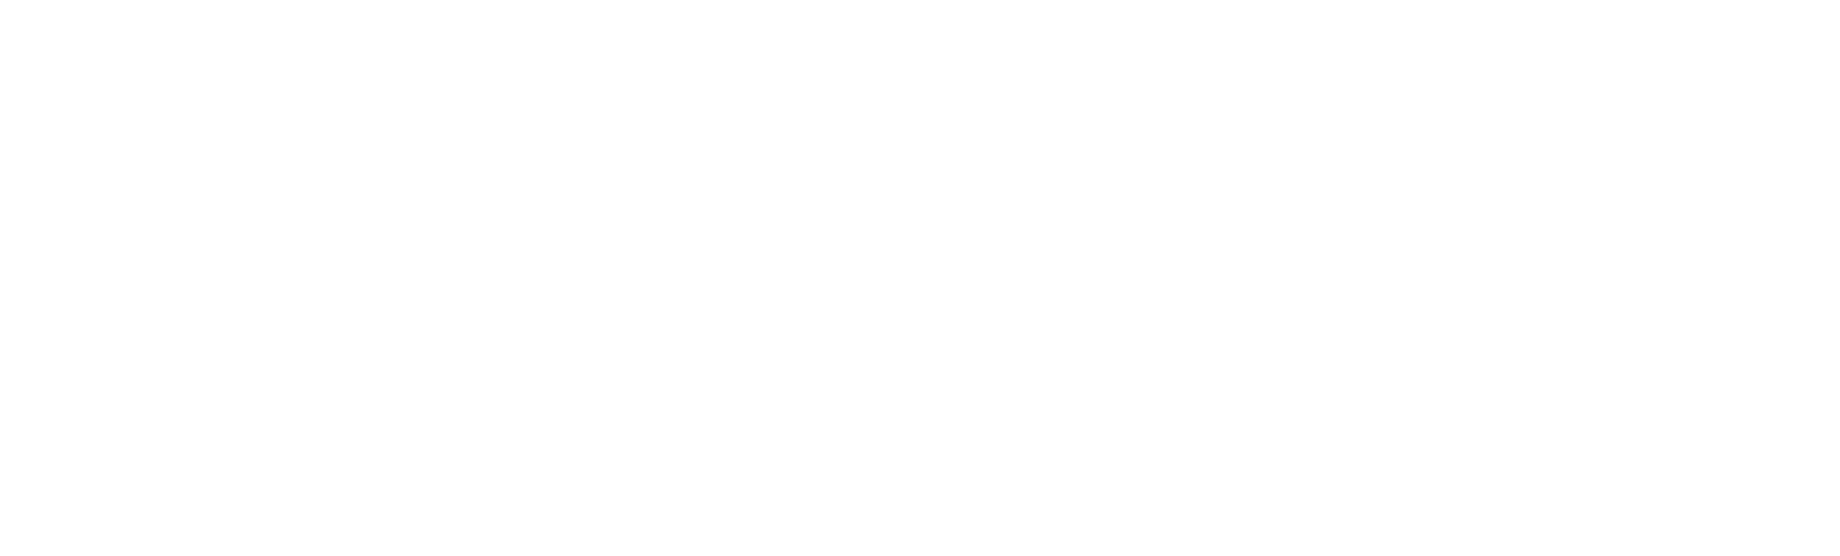 elmobil-logo.png (14 KB)